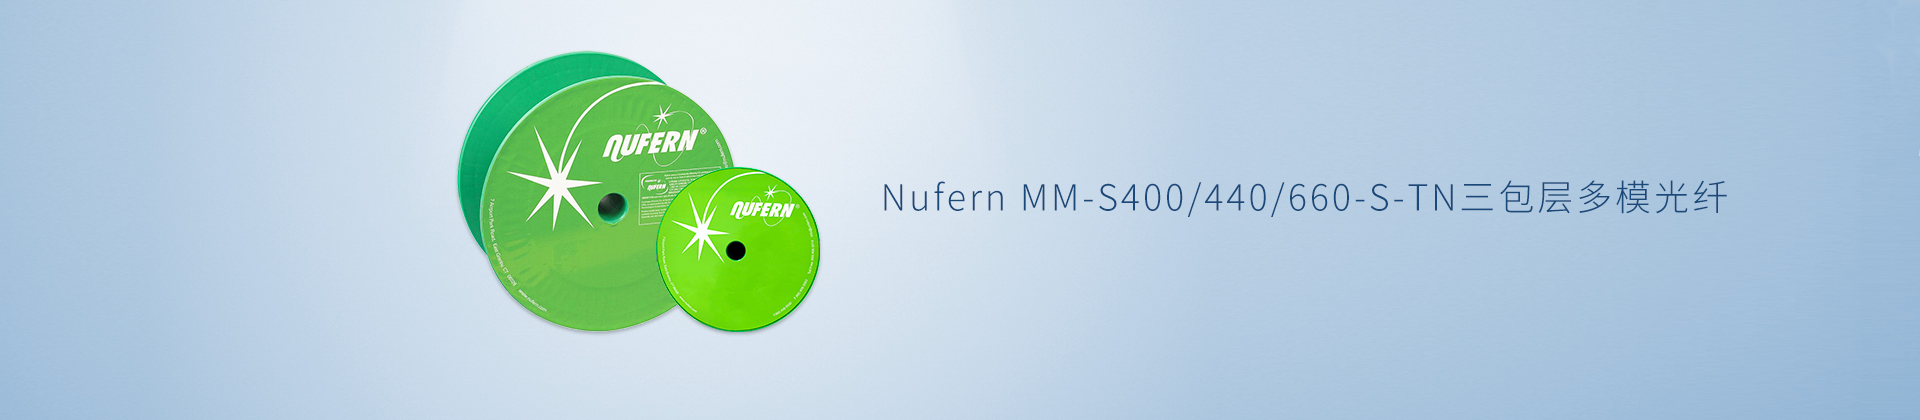 Nufern MM-S400/440/660-S-TN三包层多模光纤